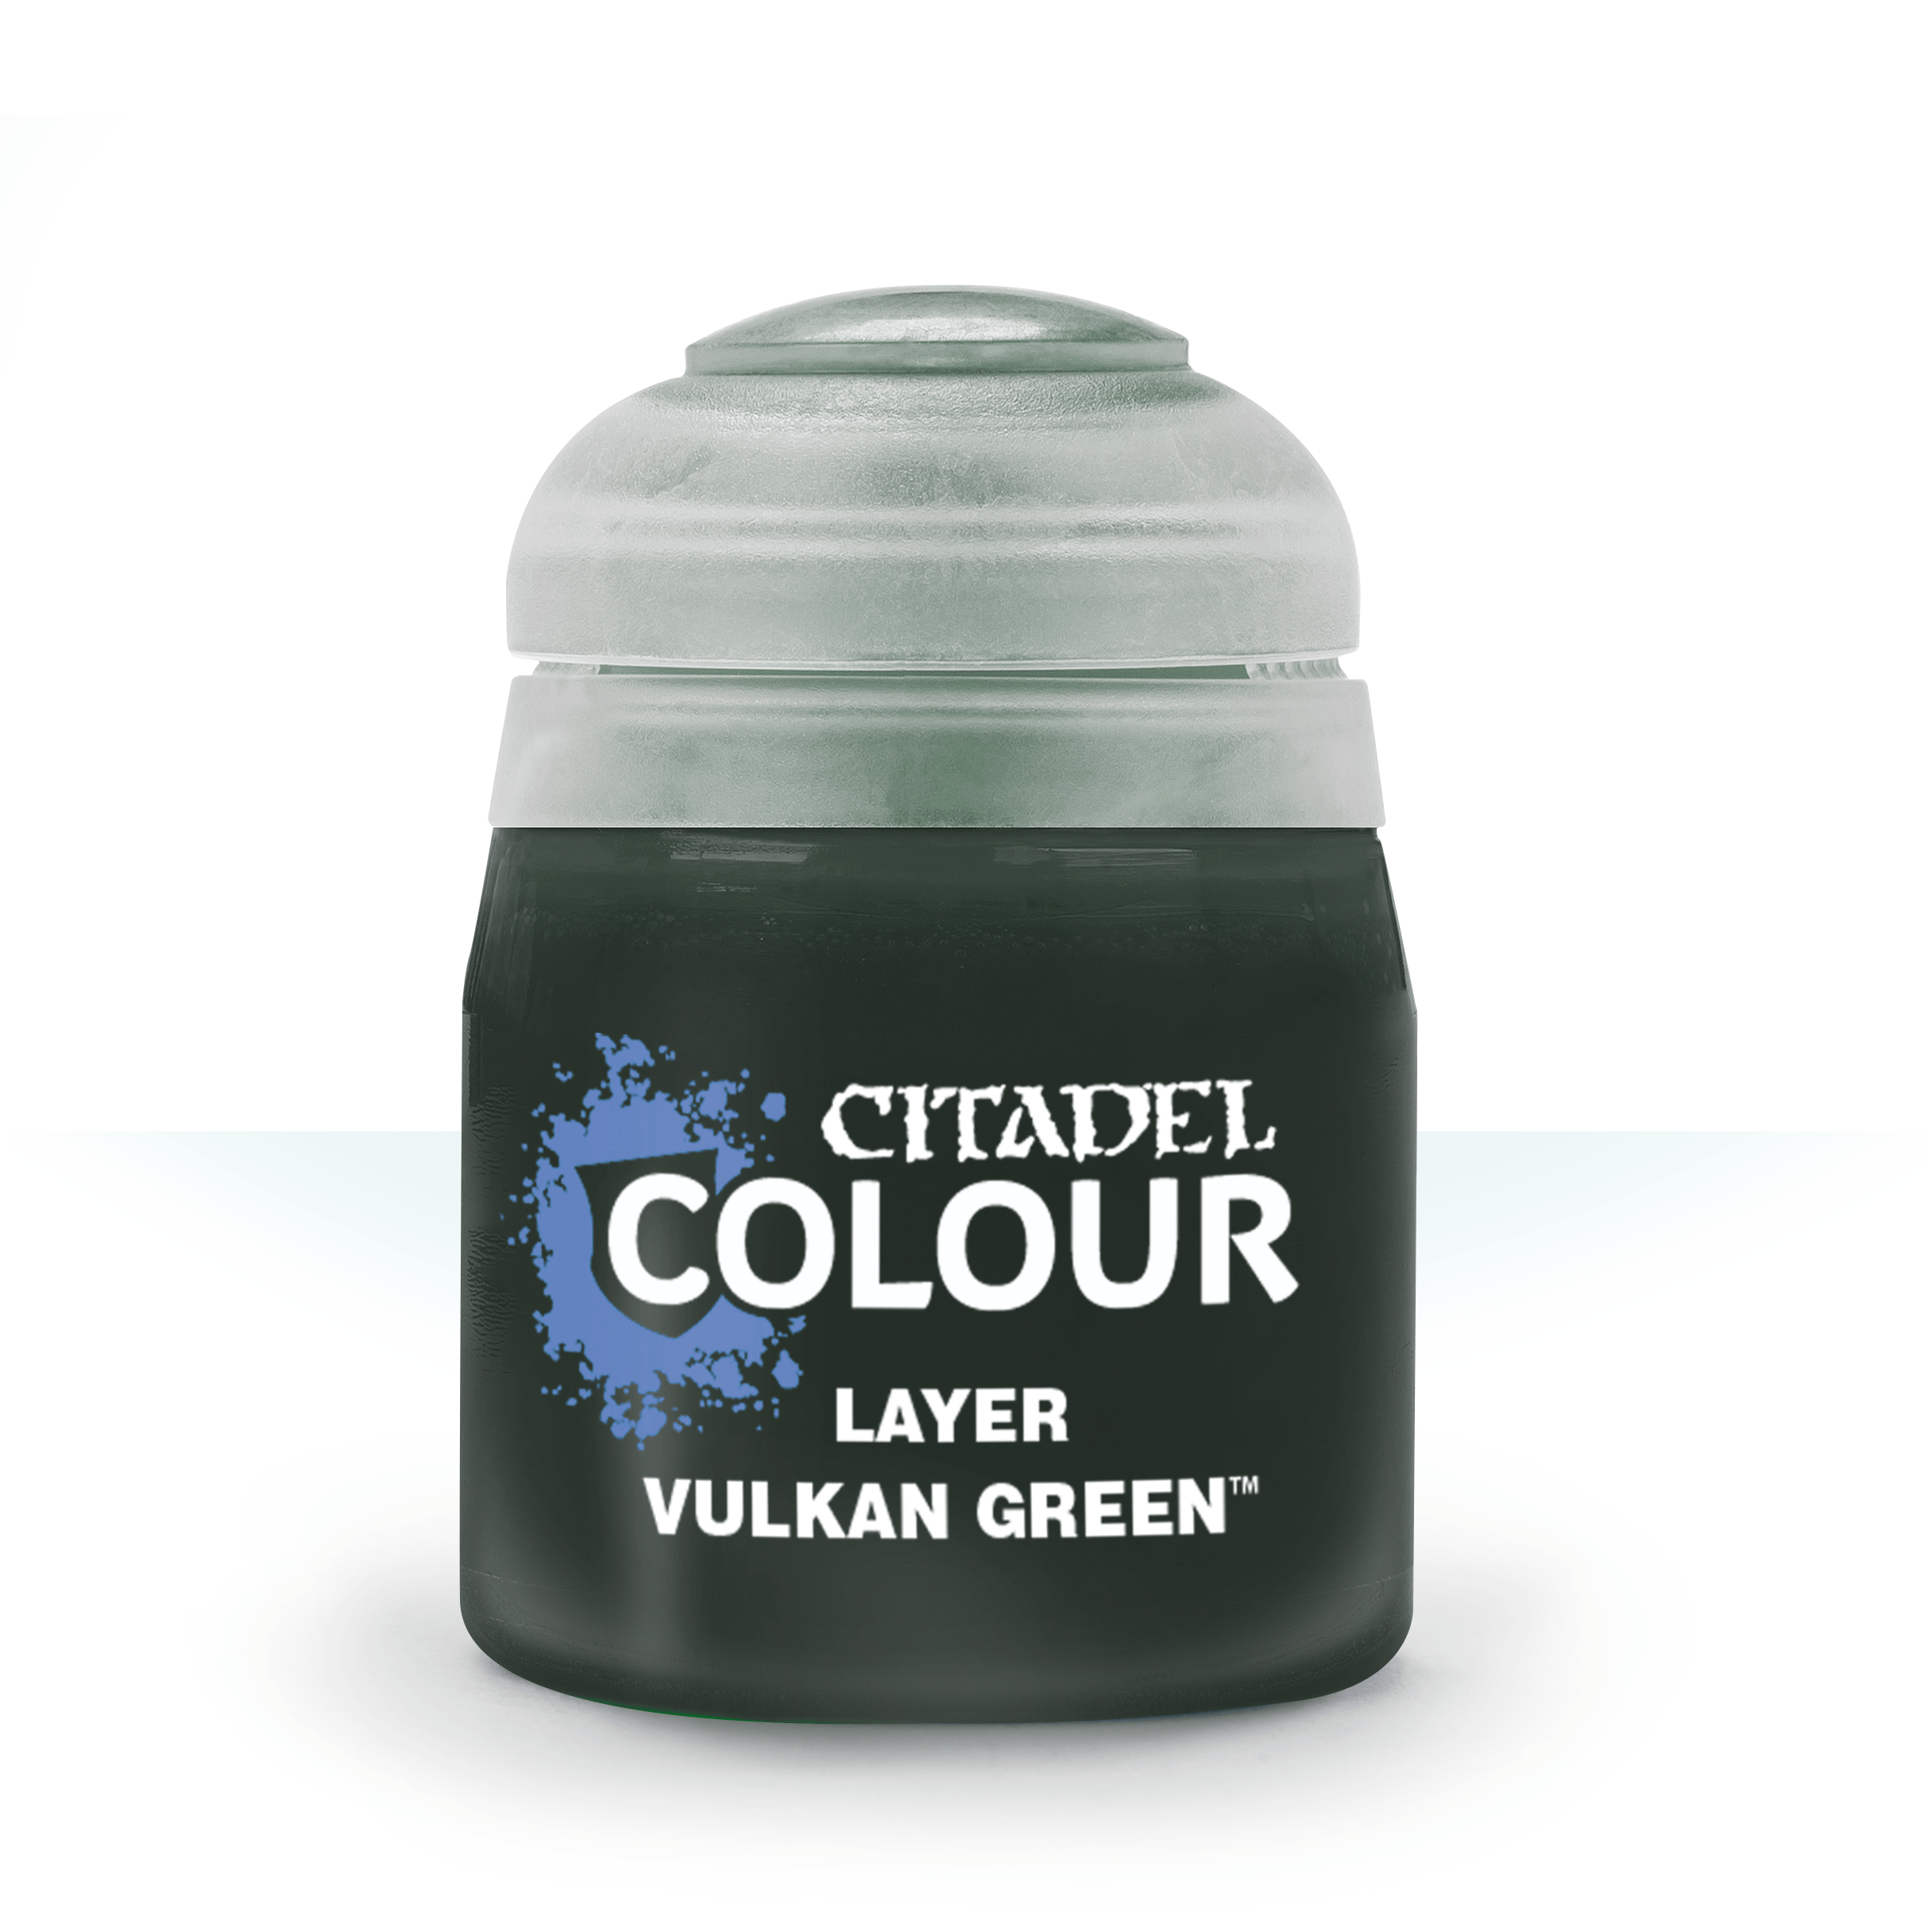 Layer Vulkan Green